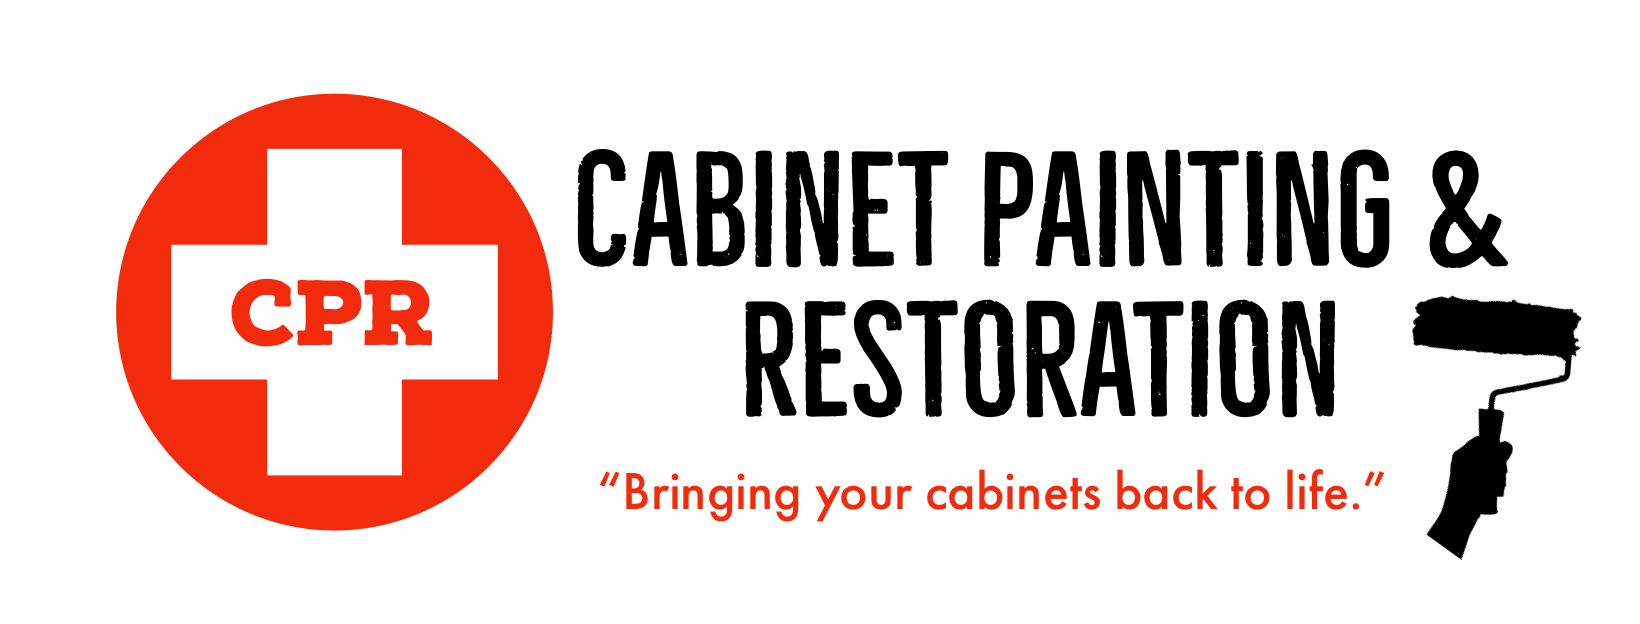 Cabinet Painting & Restoration